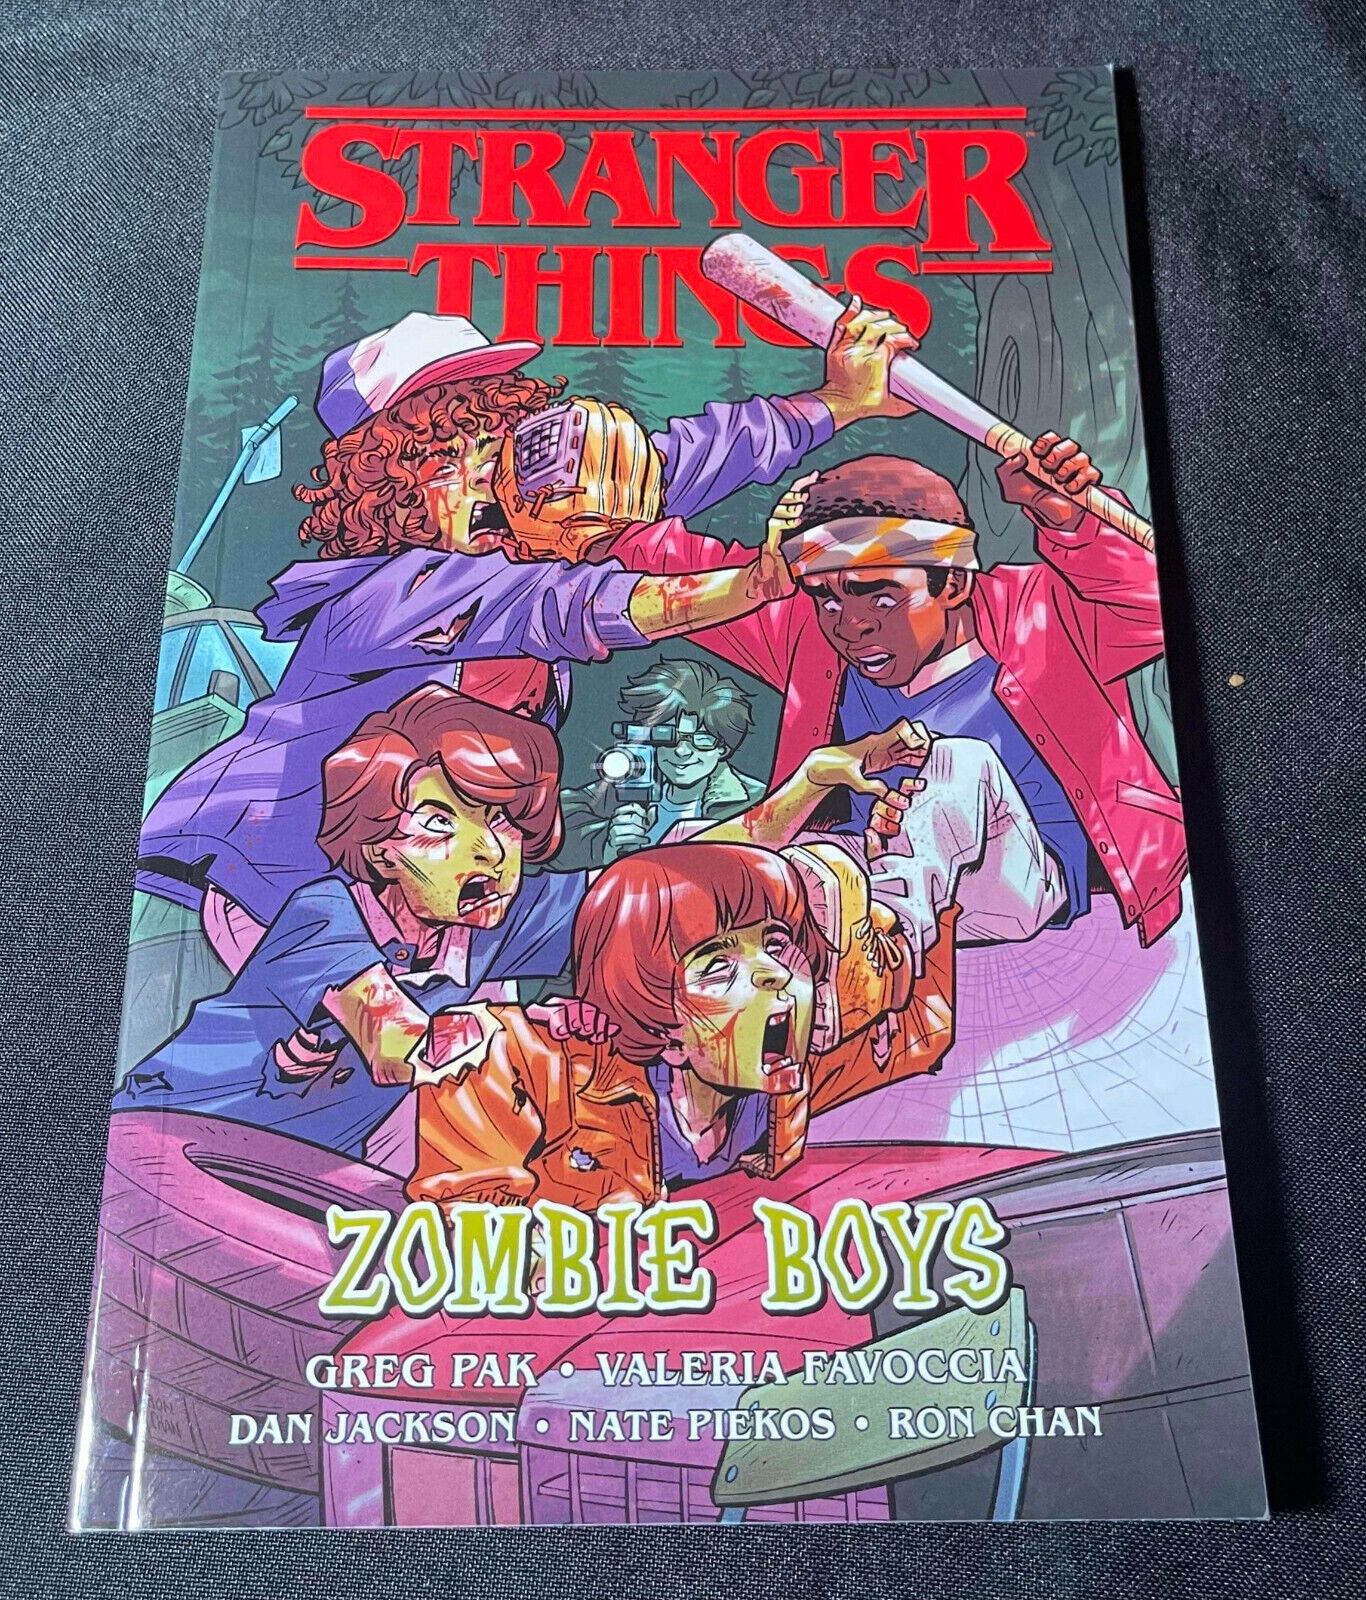 Stranger Things: Zombie Boys (Graphic Novel) by Greg Pak Trade Paperback